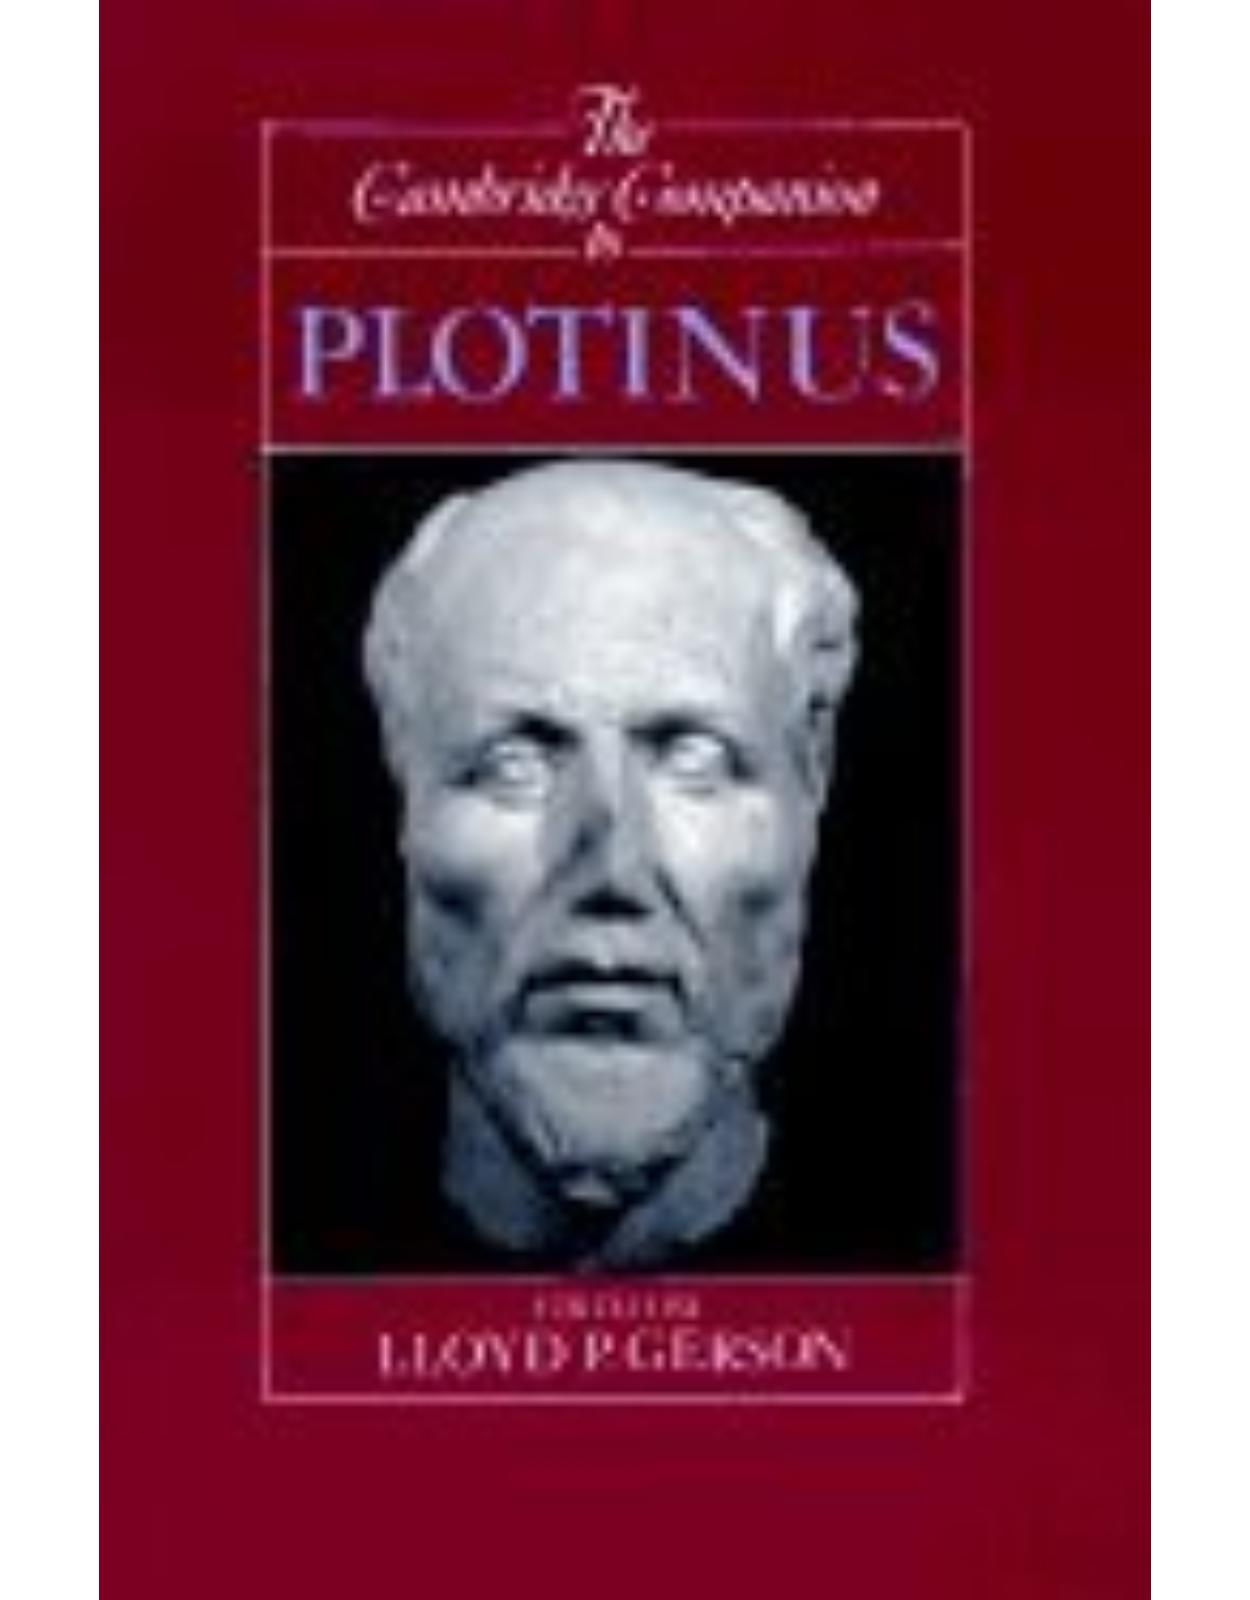 The Cambridge Companion to Plotinus (Cambridge Companions to Philosophy)